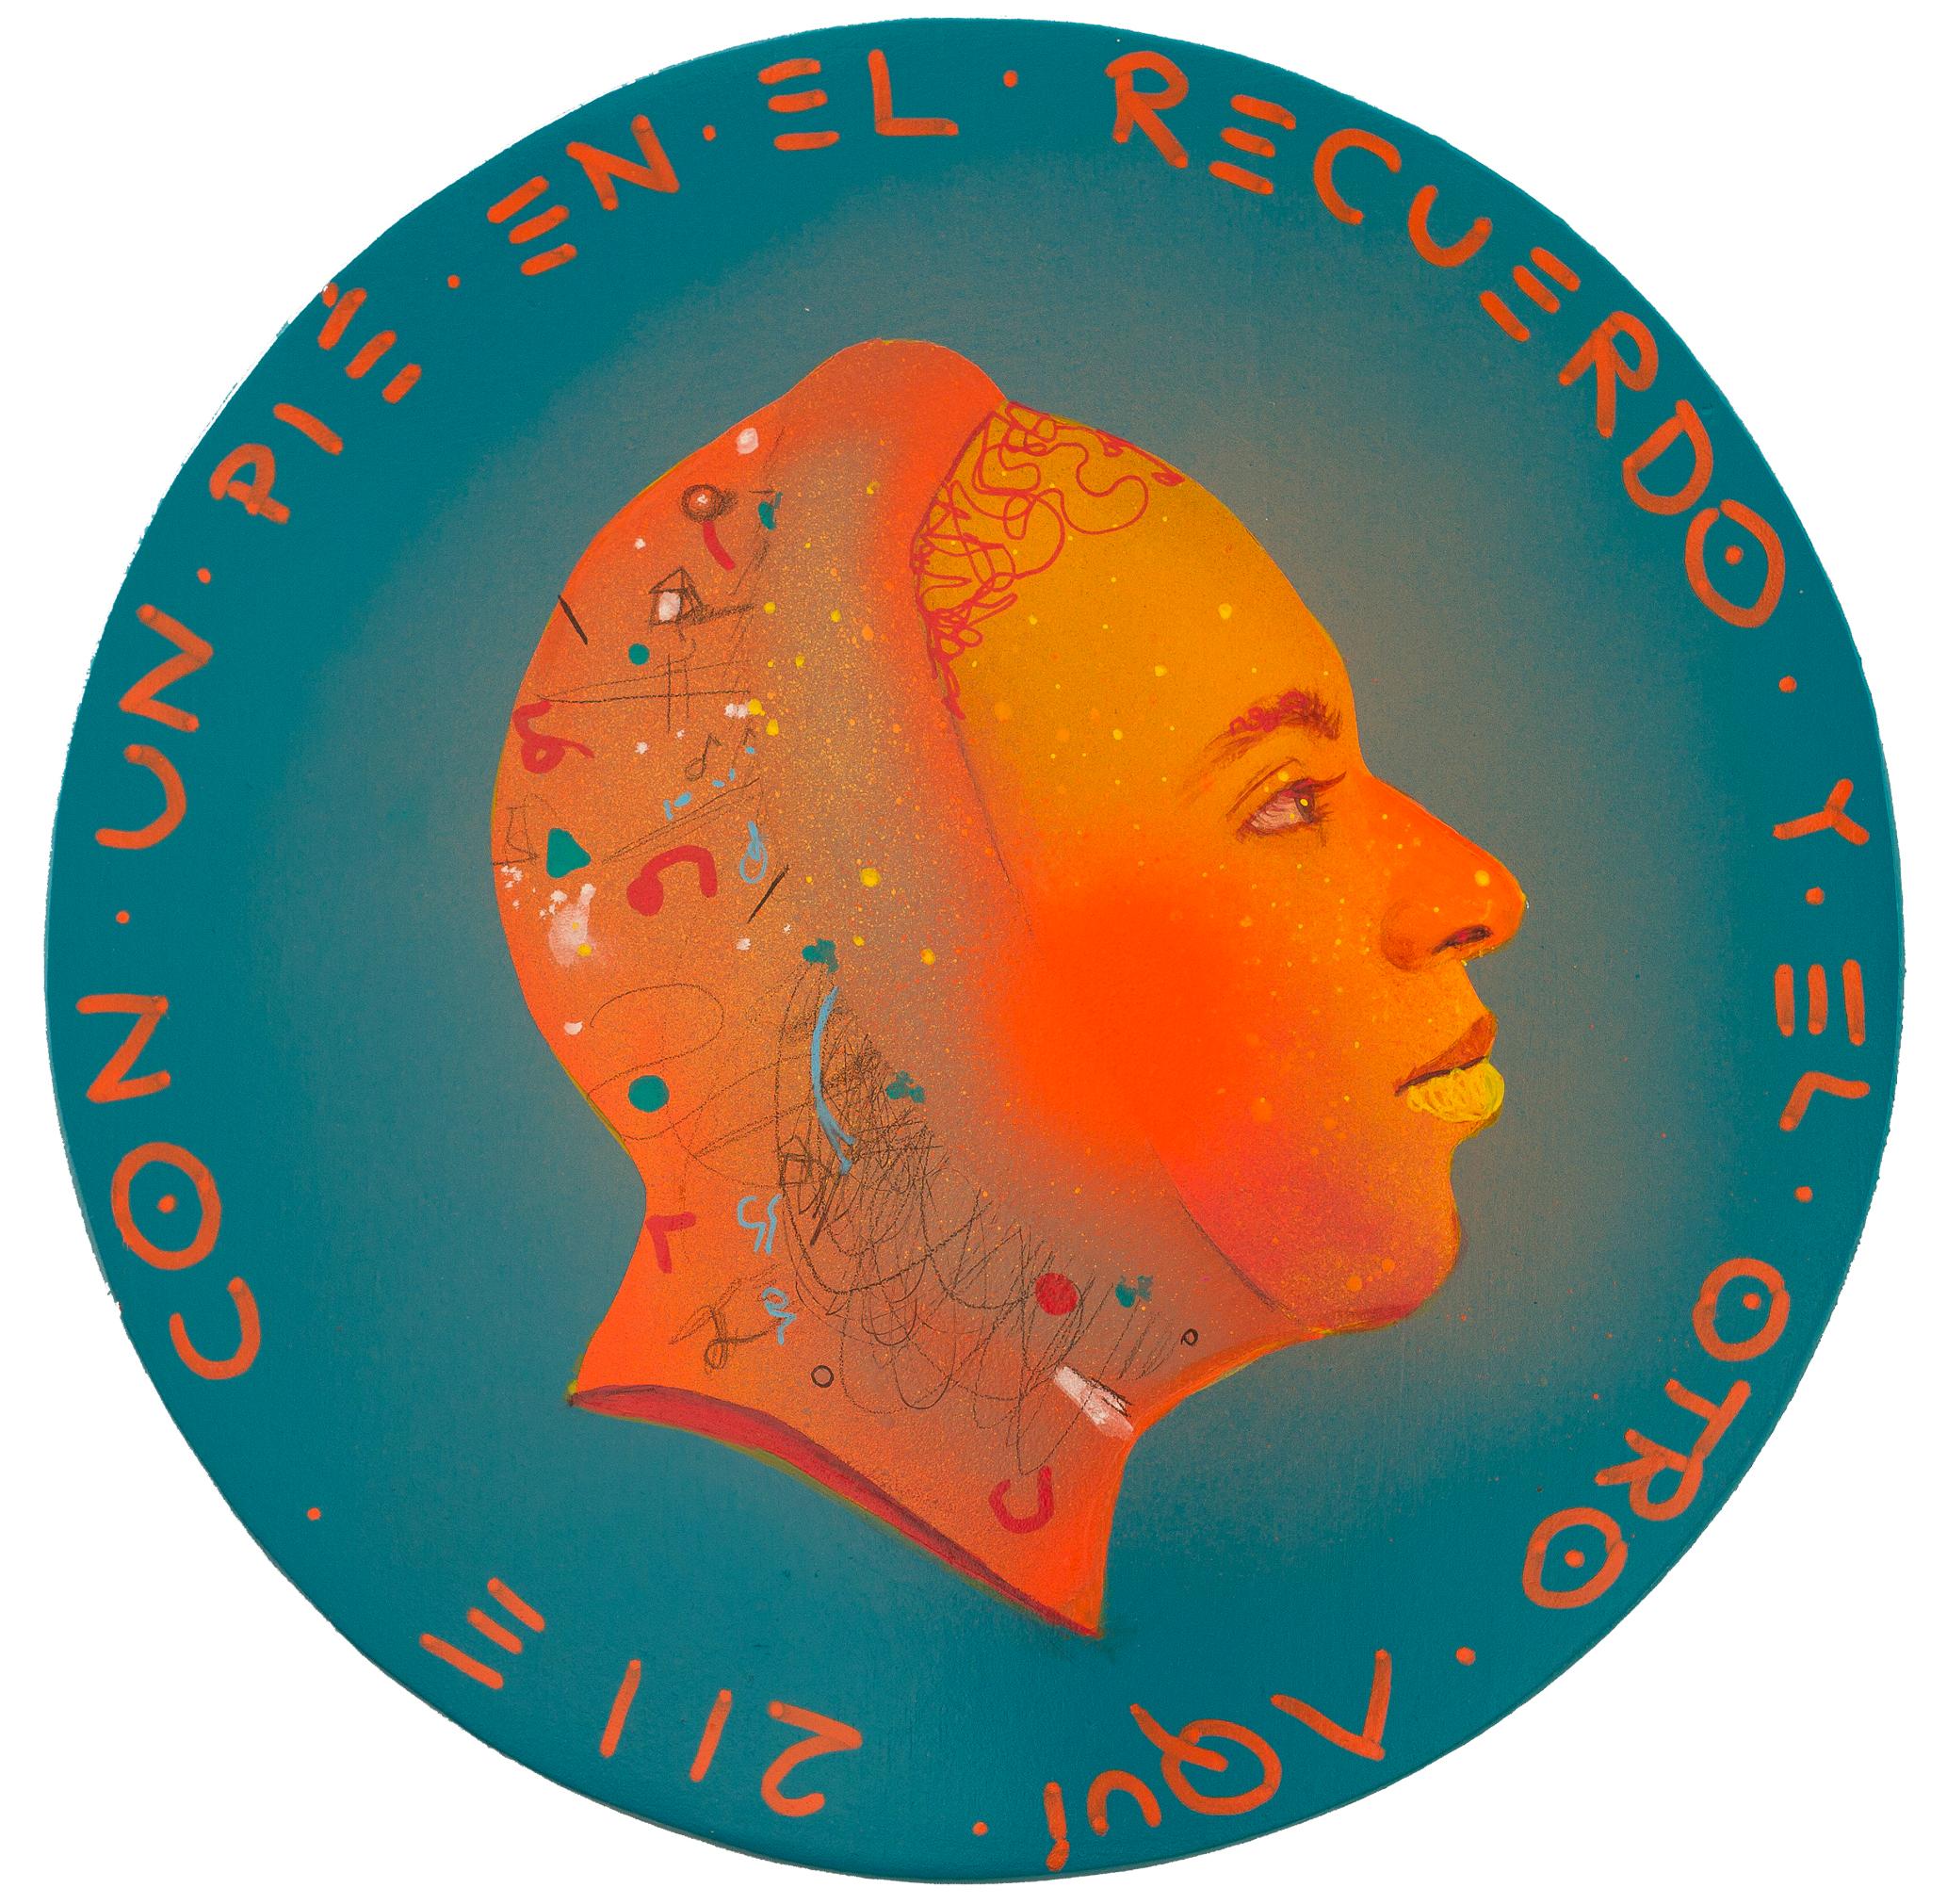 Natasha Lelenco Portrait Painting - Collectible Pop Surrealist Portrait on Wooden Coin. Blue "Currency #216"